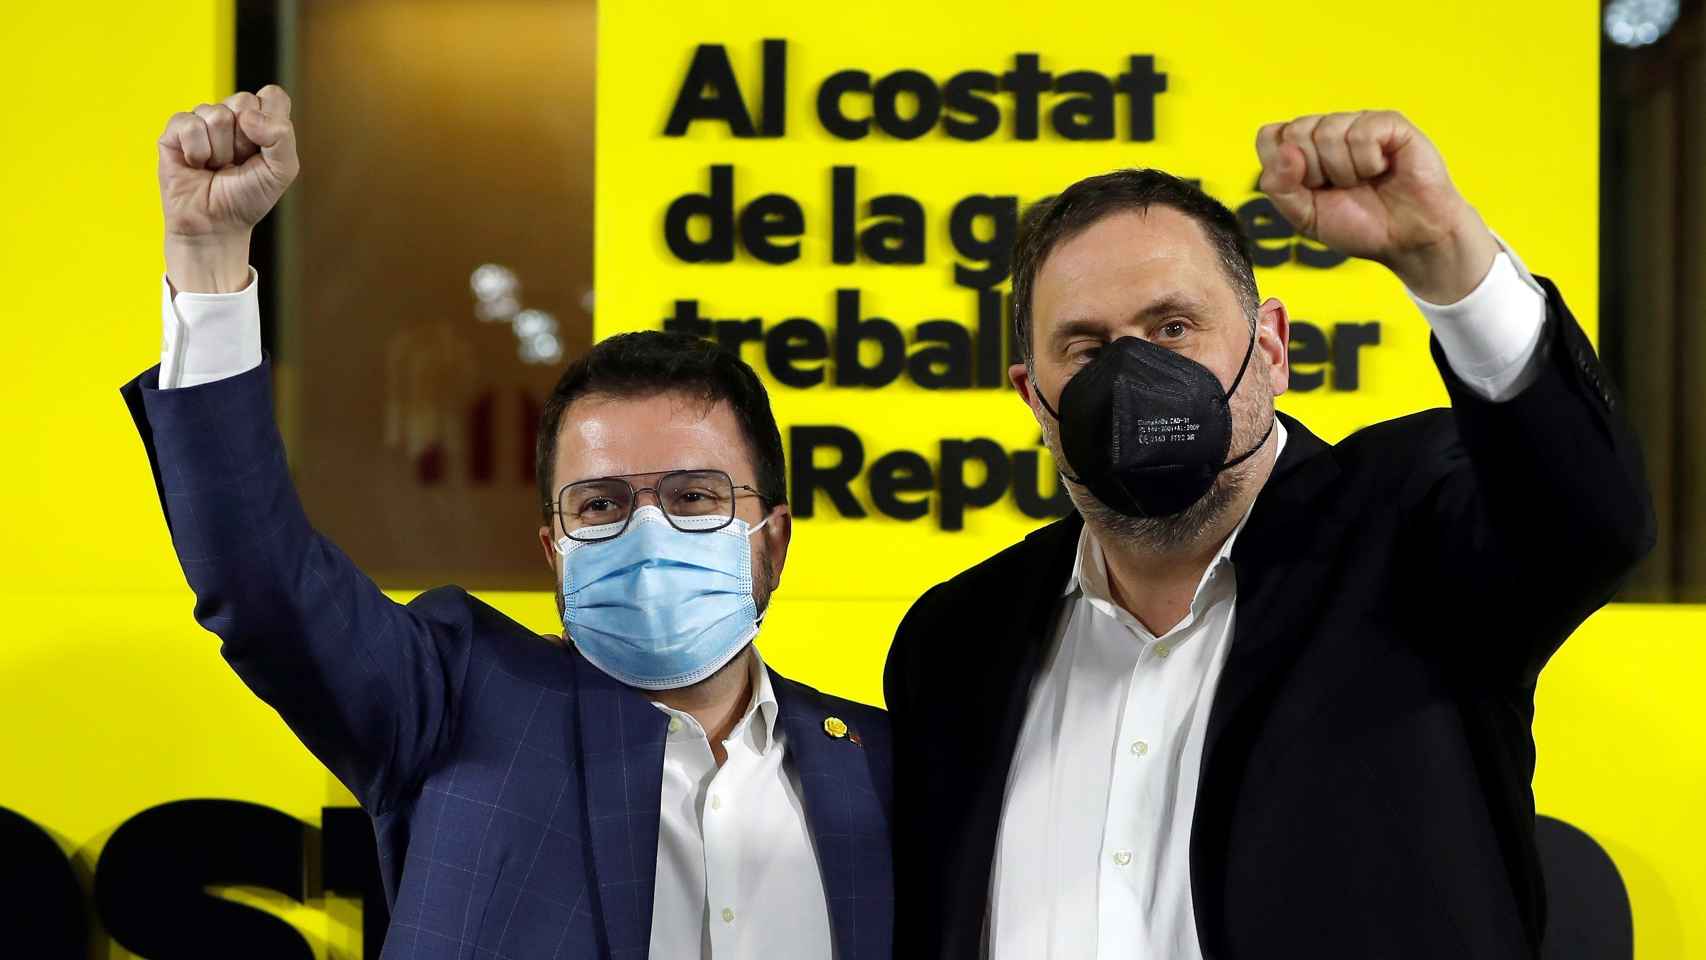 El candidato de ERC, Pere Aragonès, junto al líder del partido, Oriol Junqueras, en la noche del 14-F.